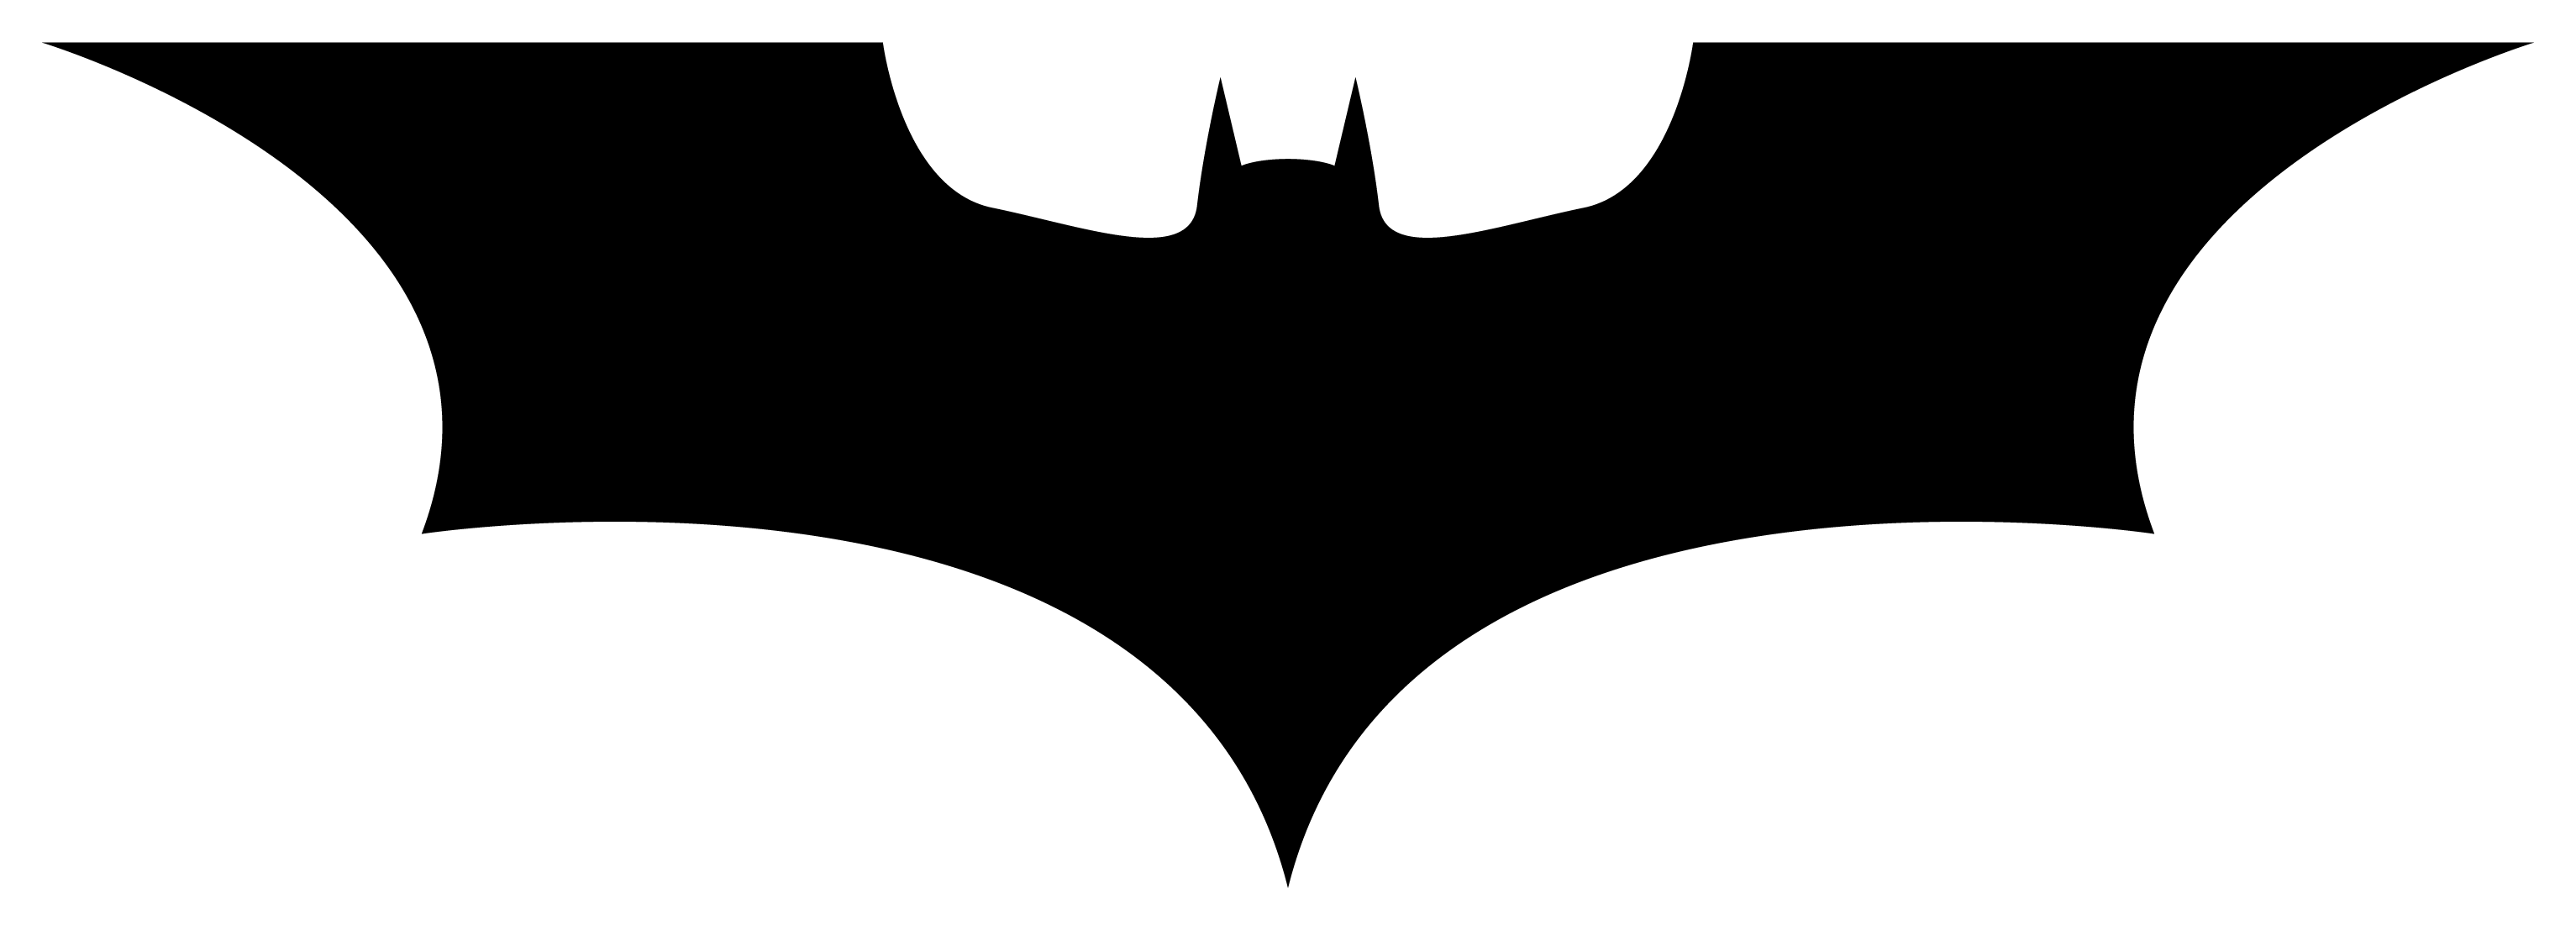 Batman Bat Logo - Bat Symbol Stencil Batman Pic | Nicky | Pinterest | Stencils, Batman ...